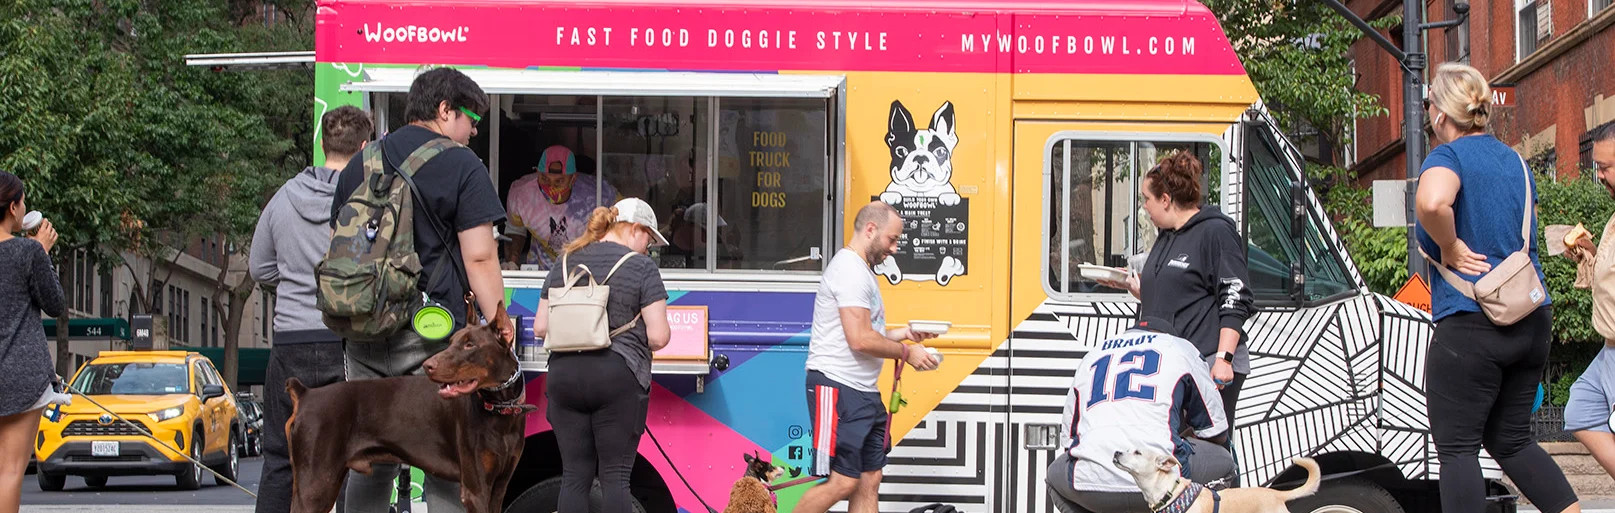 food truck ideas - Woofbowl